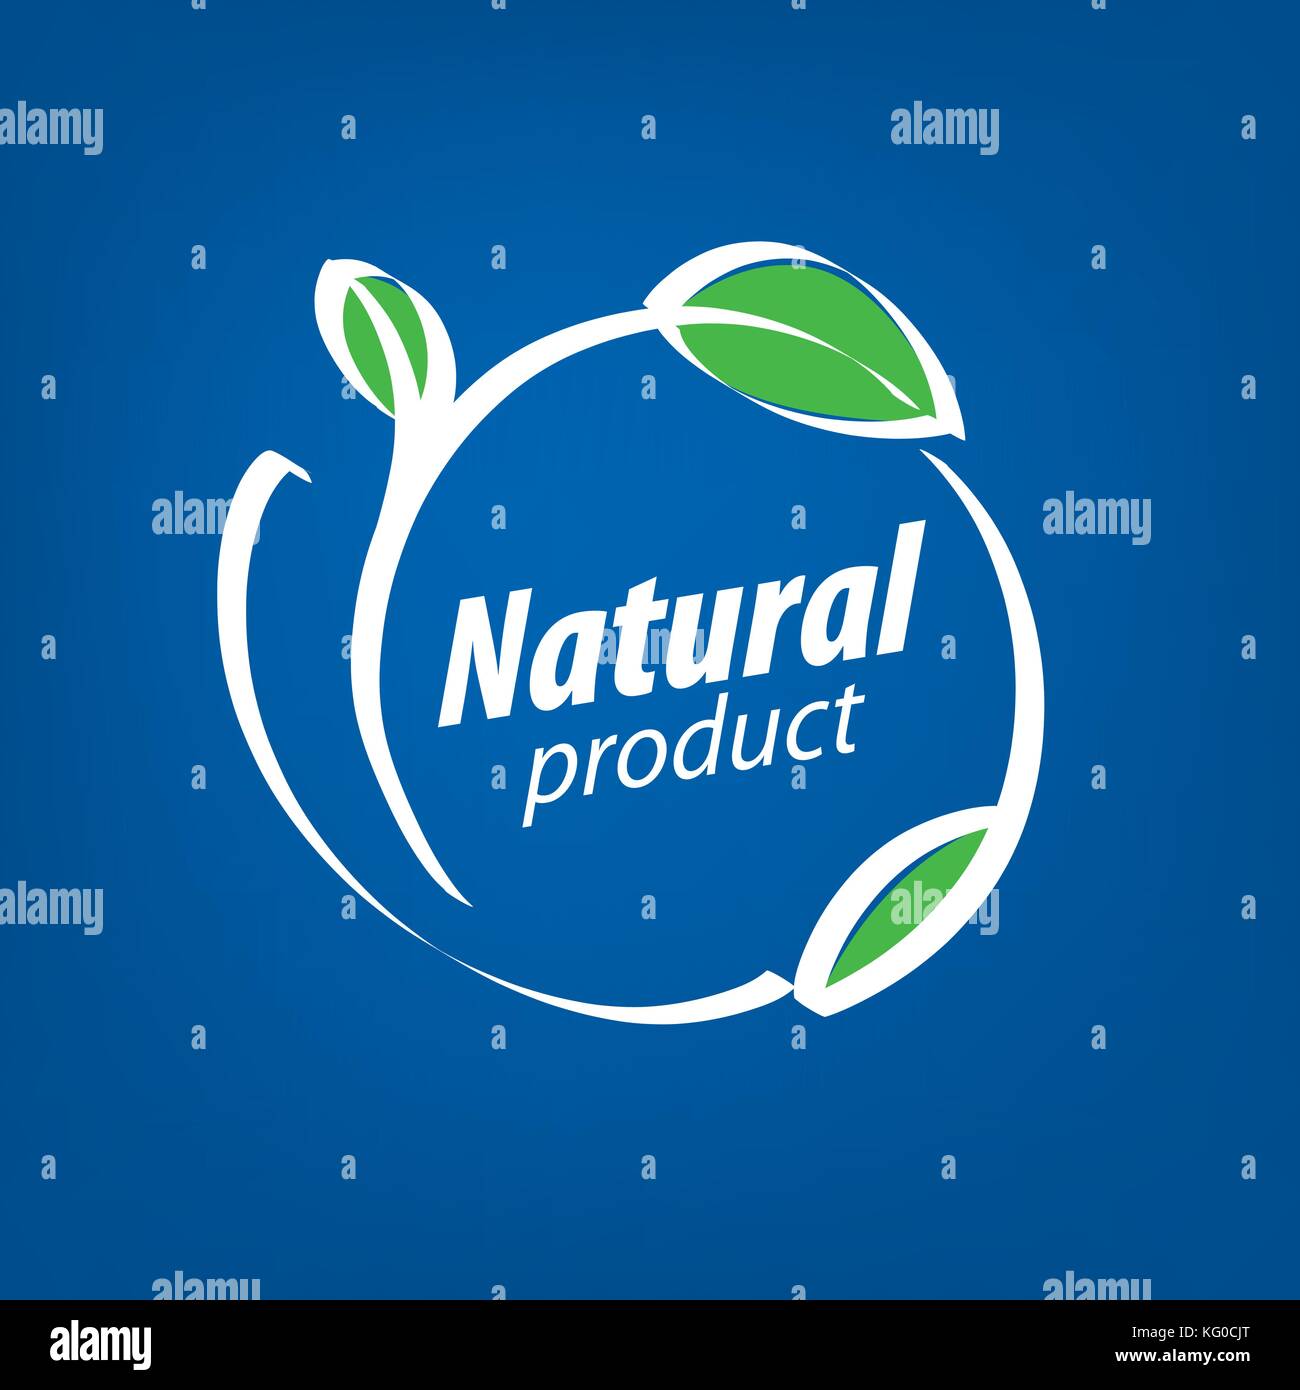 Natural product logo Stock Vector